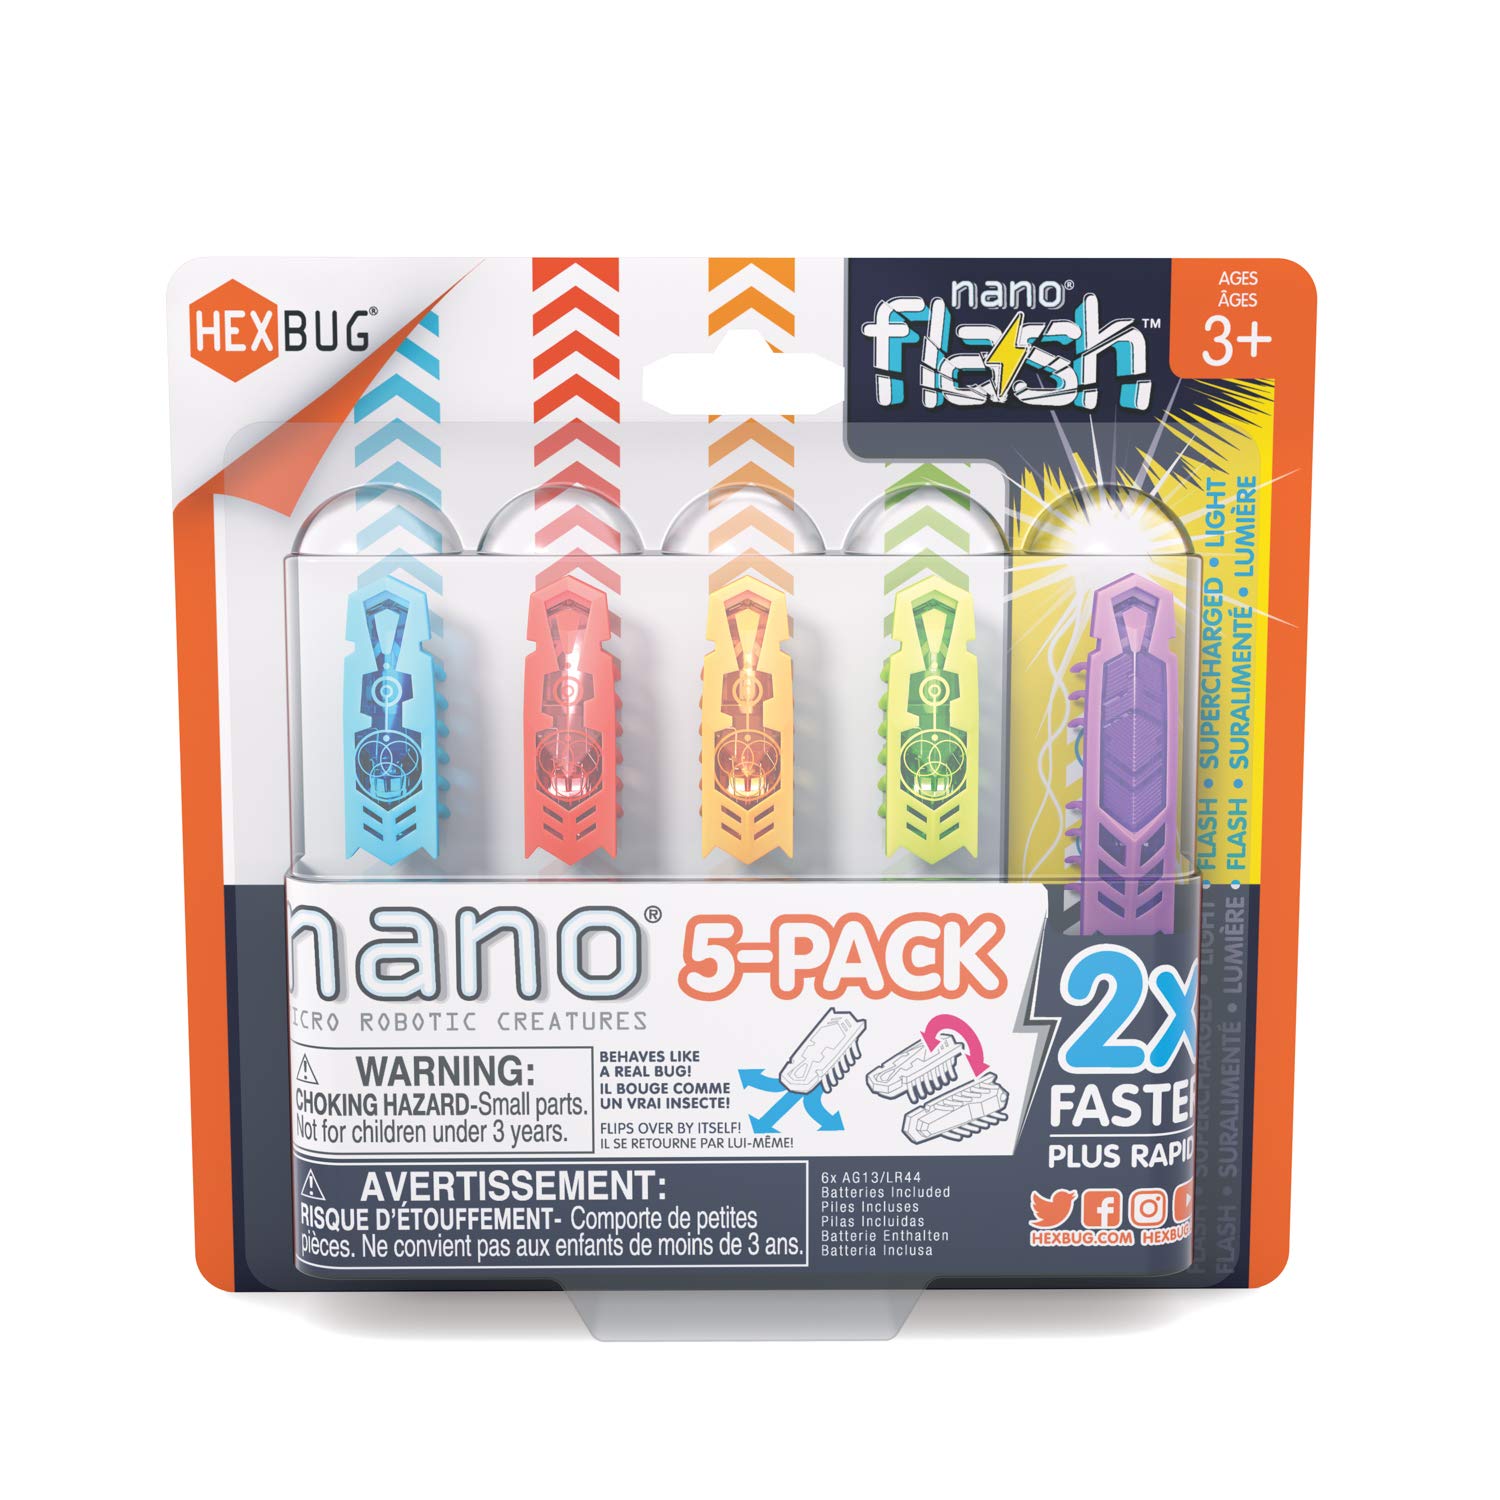 HEXBUG Nano 5 Pack - 4 nanos Plus Bonus Flash Nano - Sensory Vibration Toys for Kids and Cats - Small HEX Bug Tech Toy - Batteries Included - Multicolor